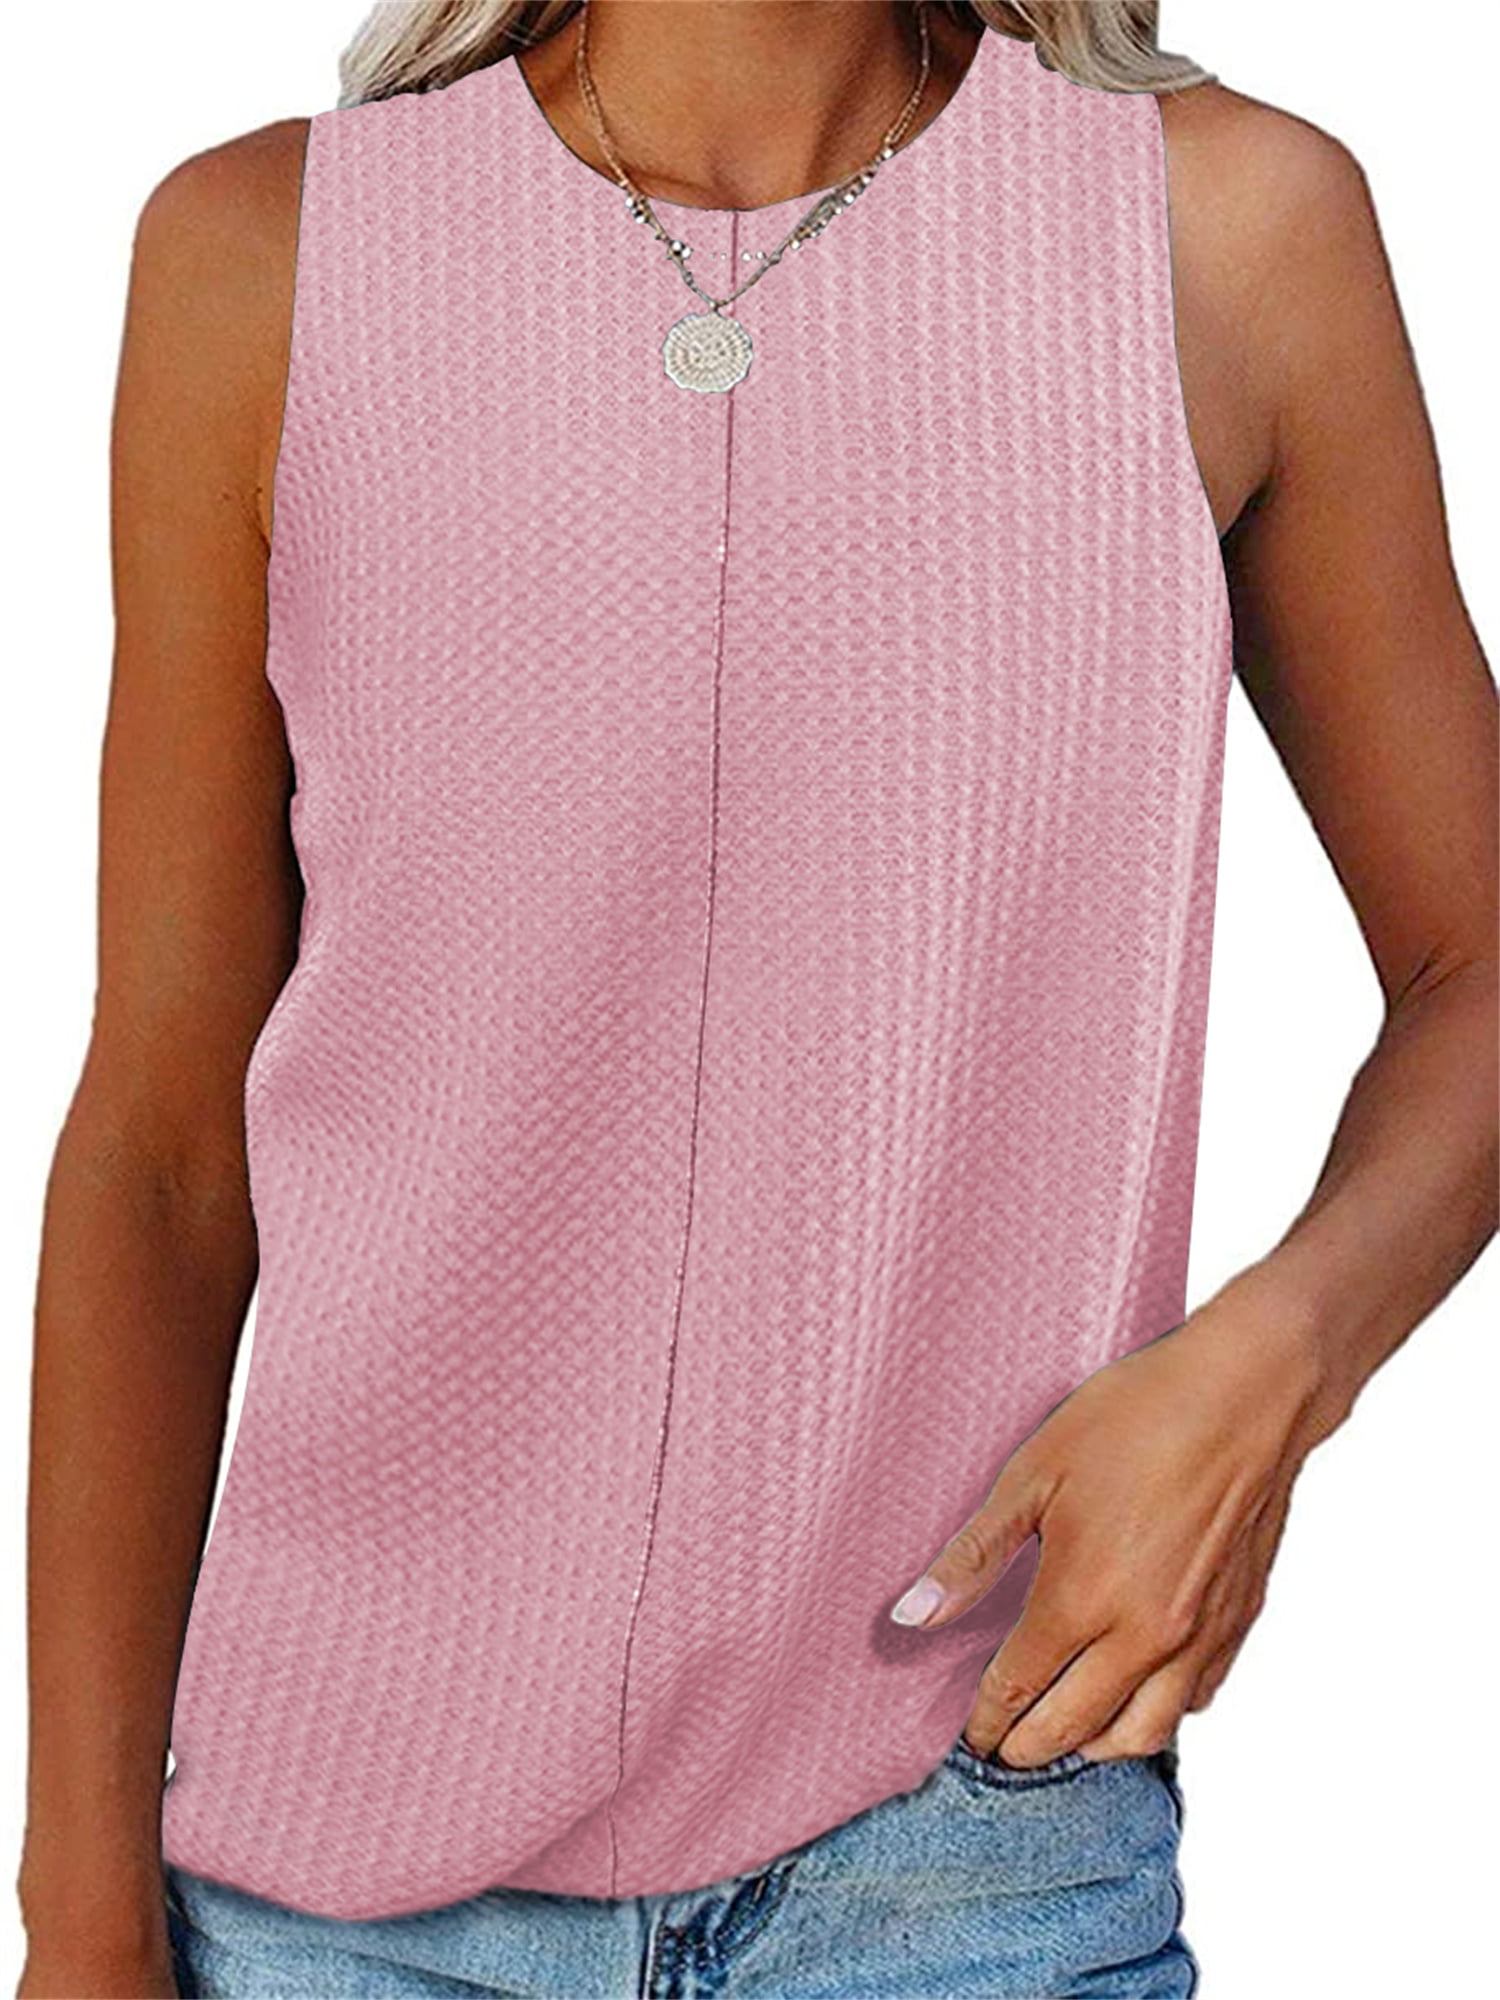 Womens Sleeveless Cotton Tee Shirts